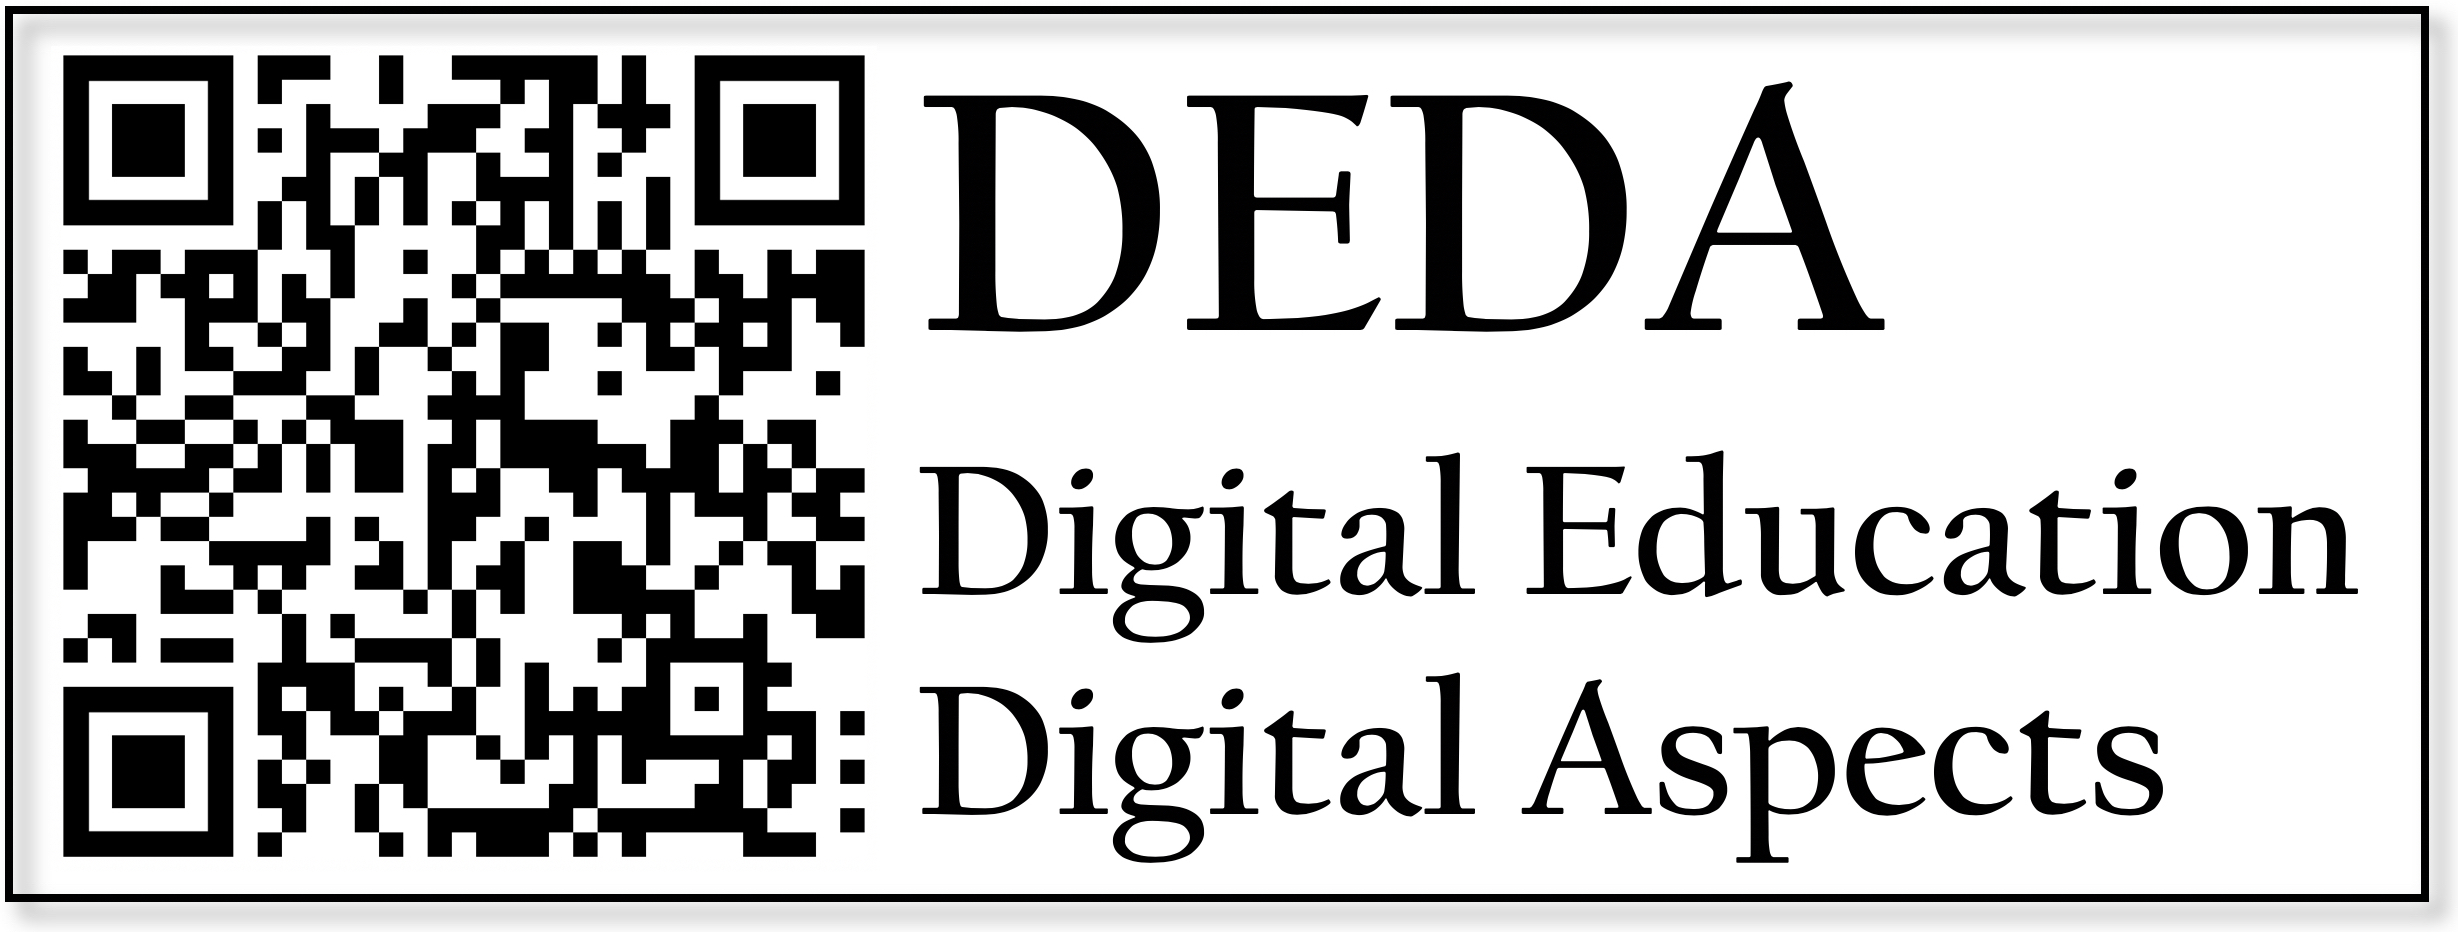 DEDA Logo.jpg